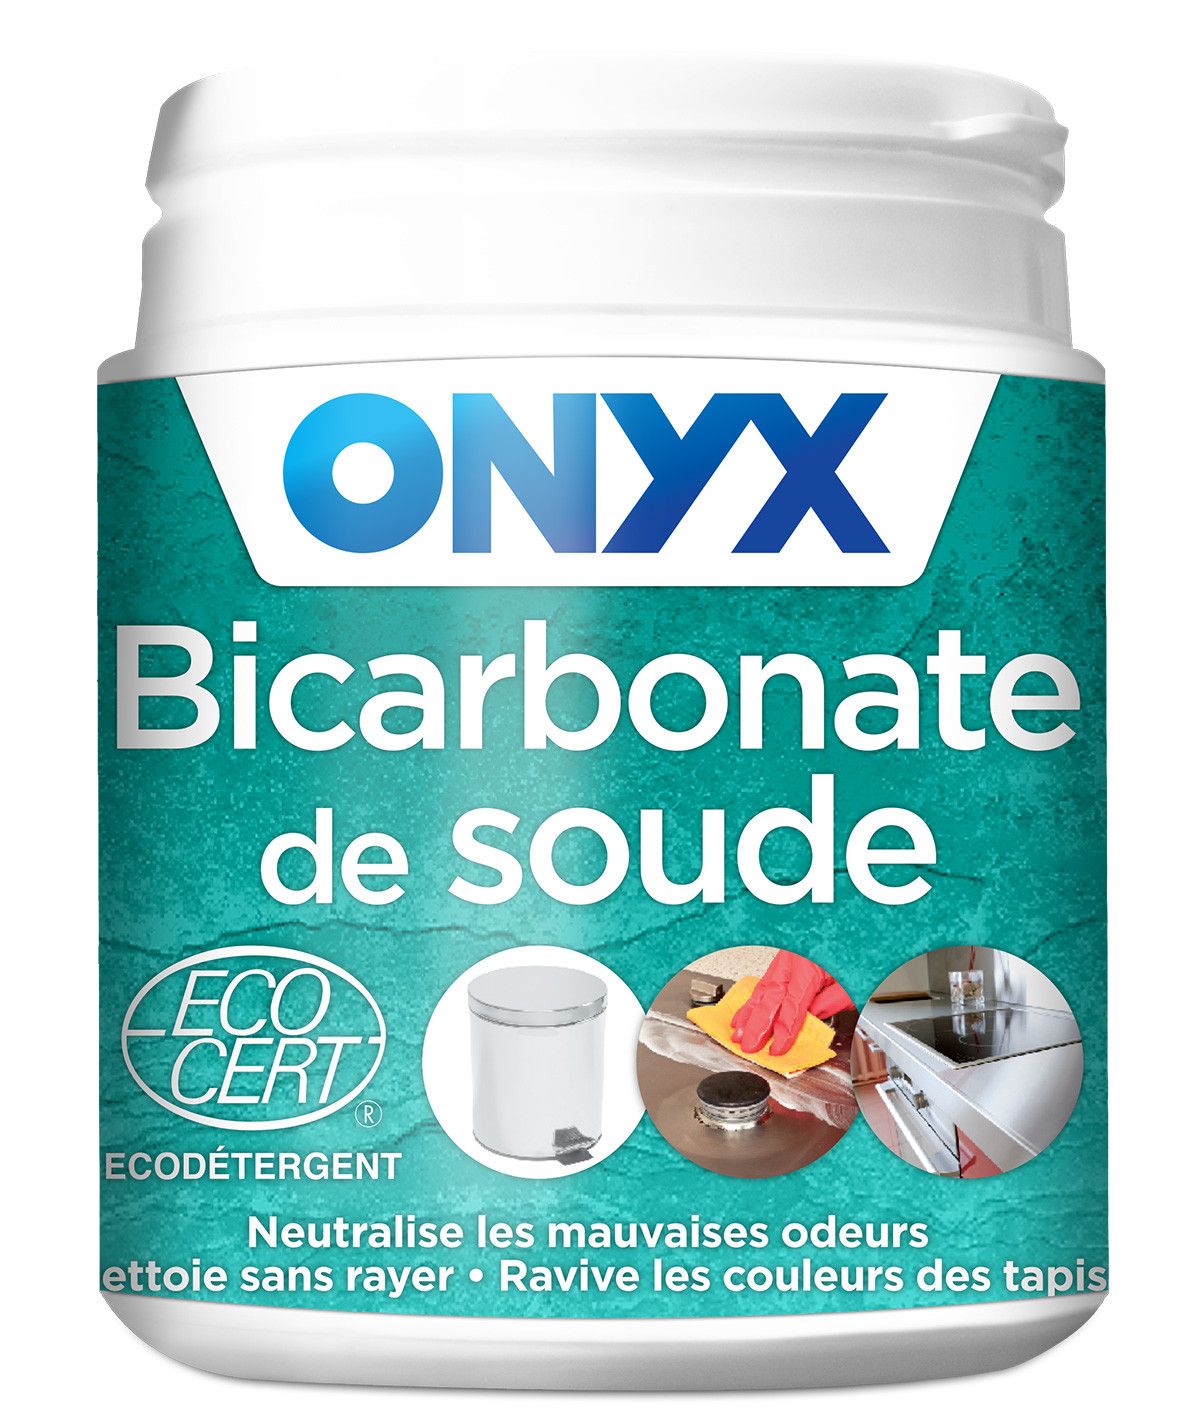 Bicarbonate de soude 500g - Nutri Naturel